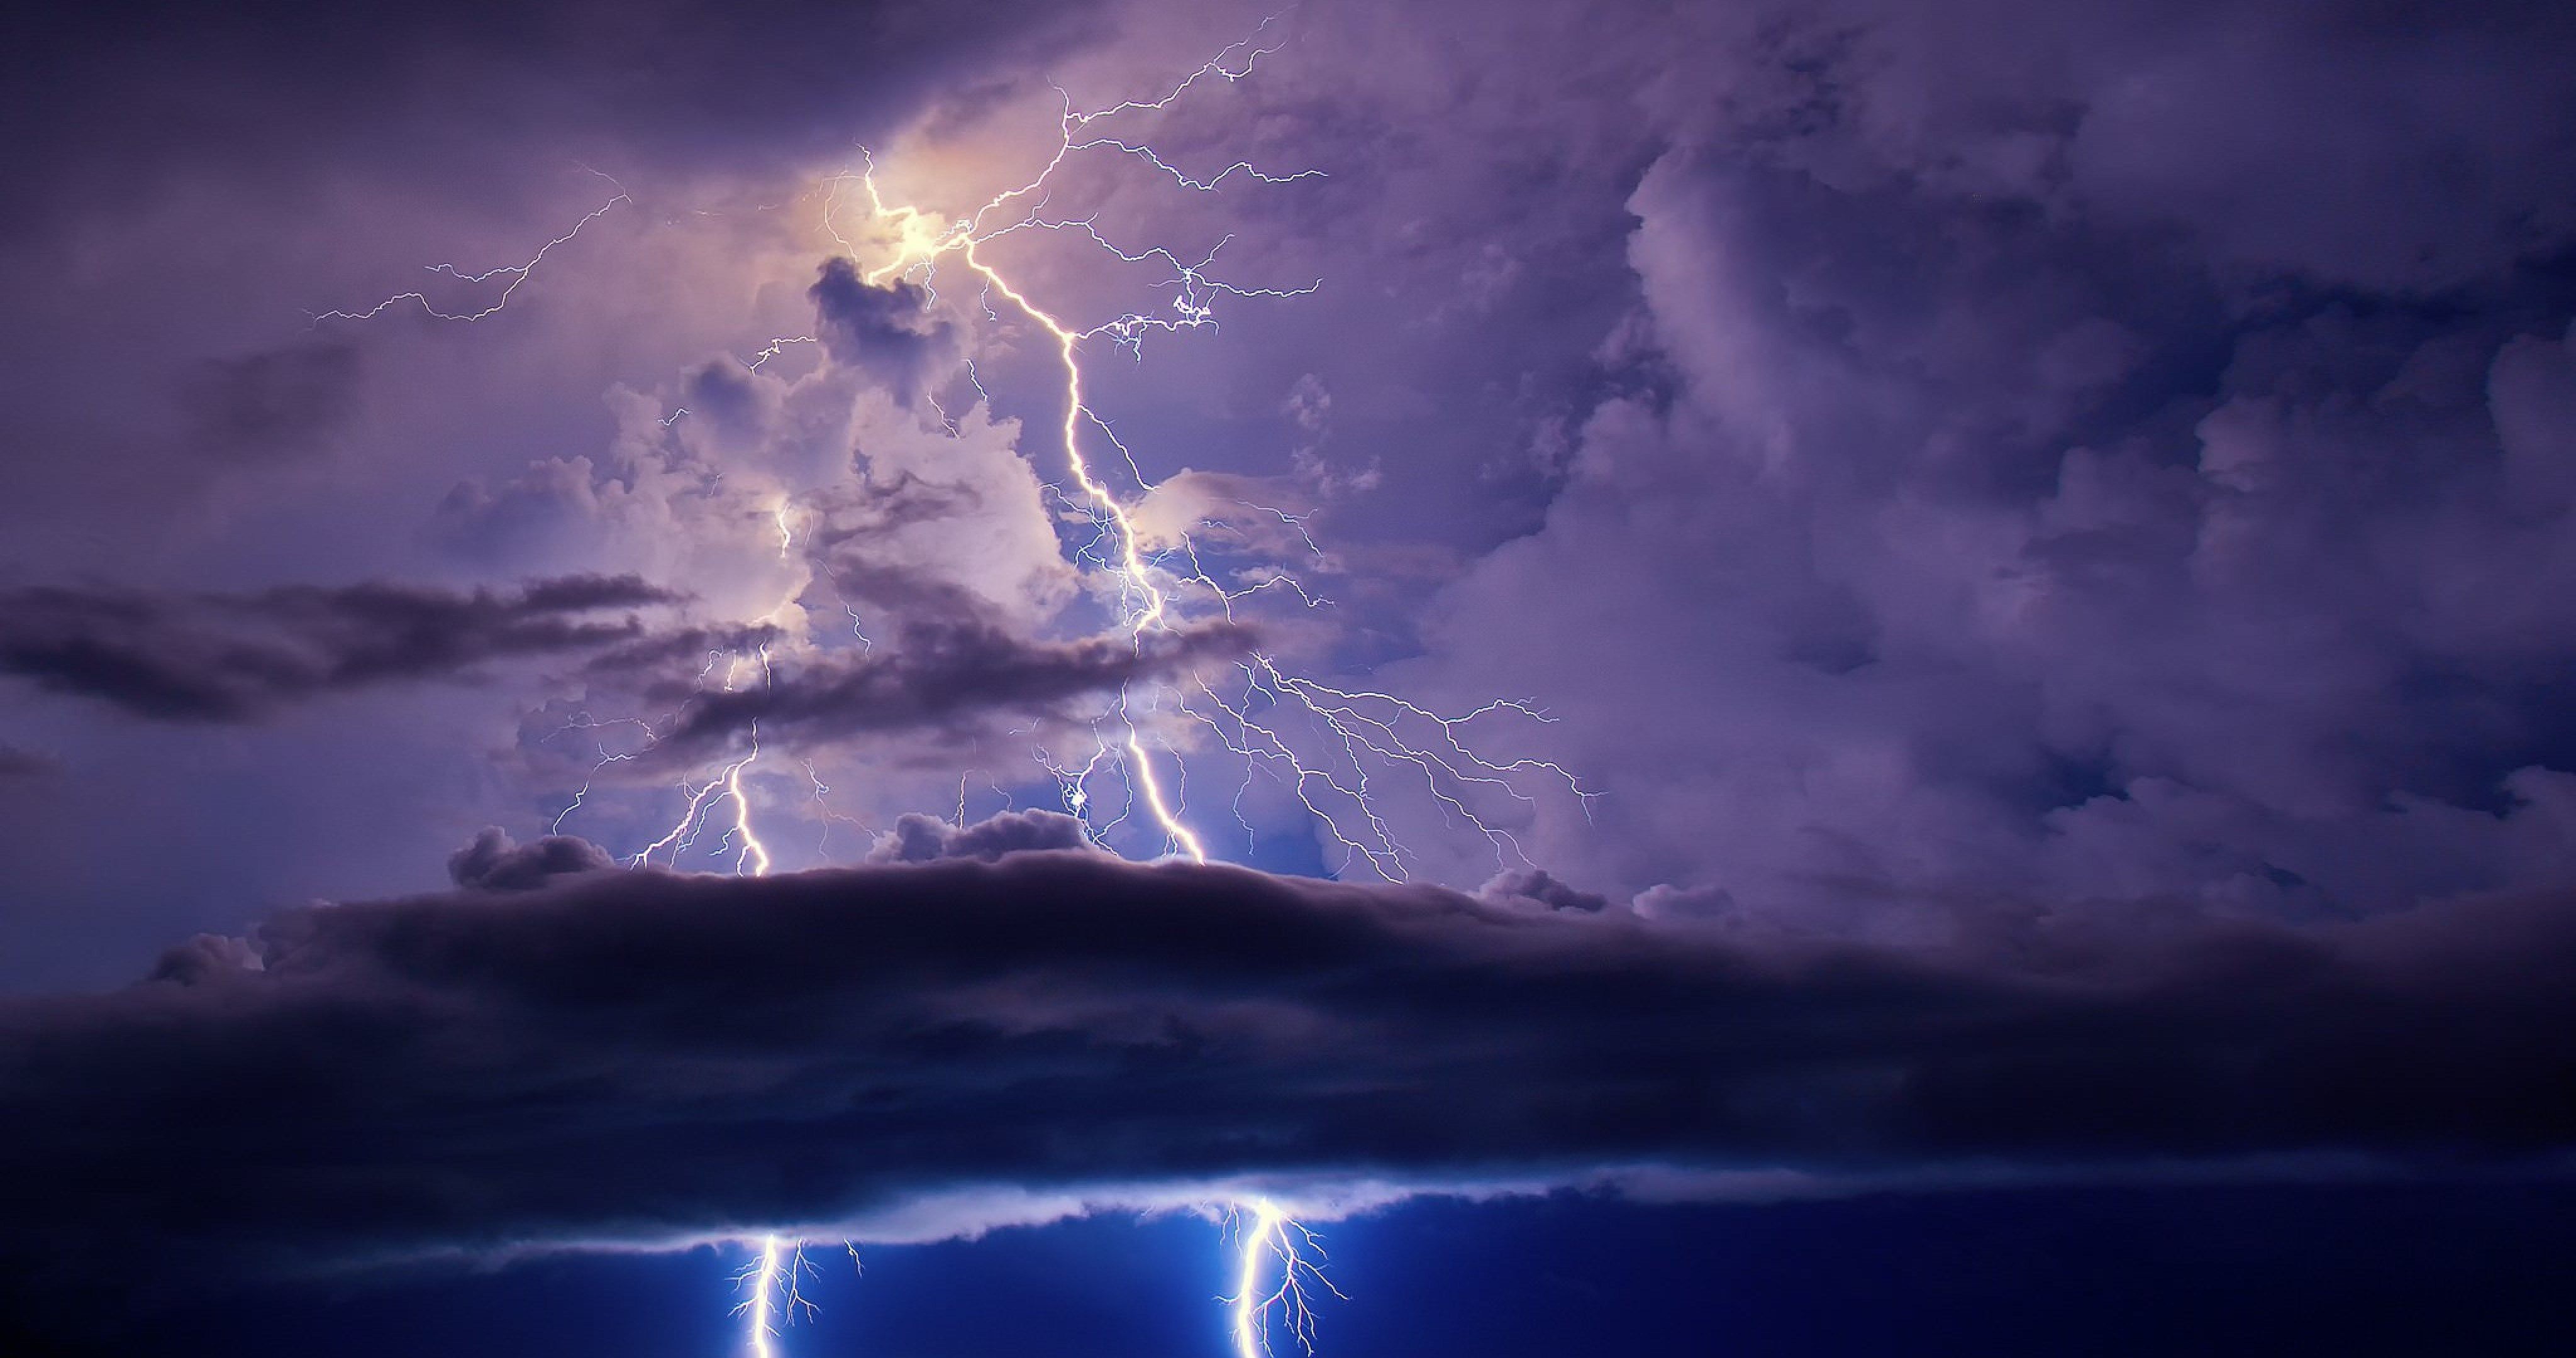 4K Thunder Storm Lightning Wallpaper HDAmazoncomAppstore for Android